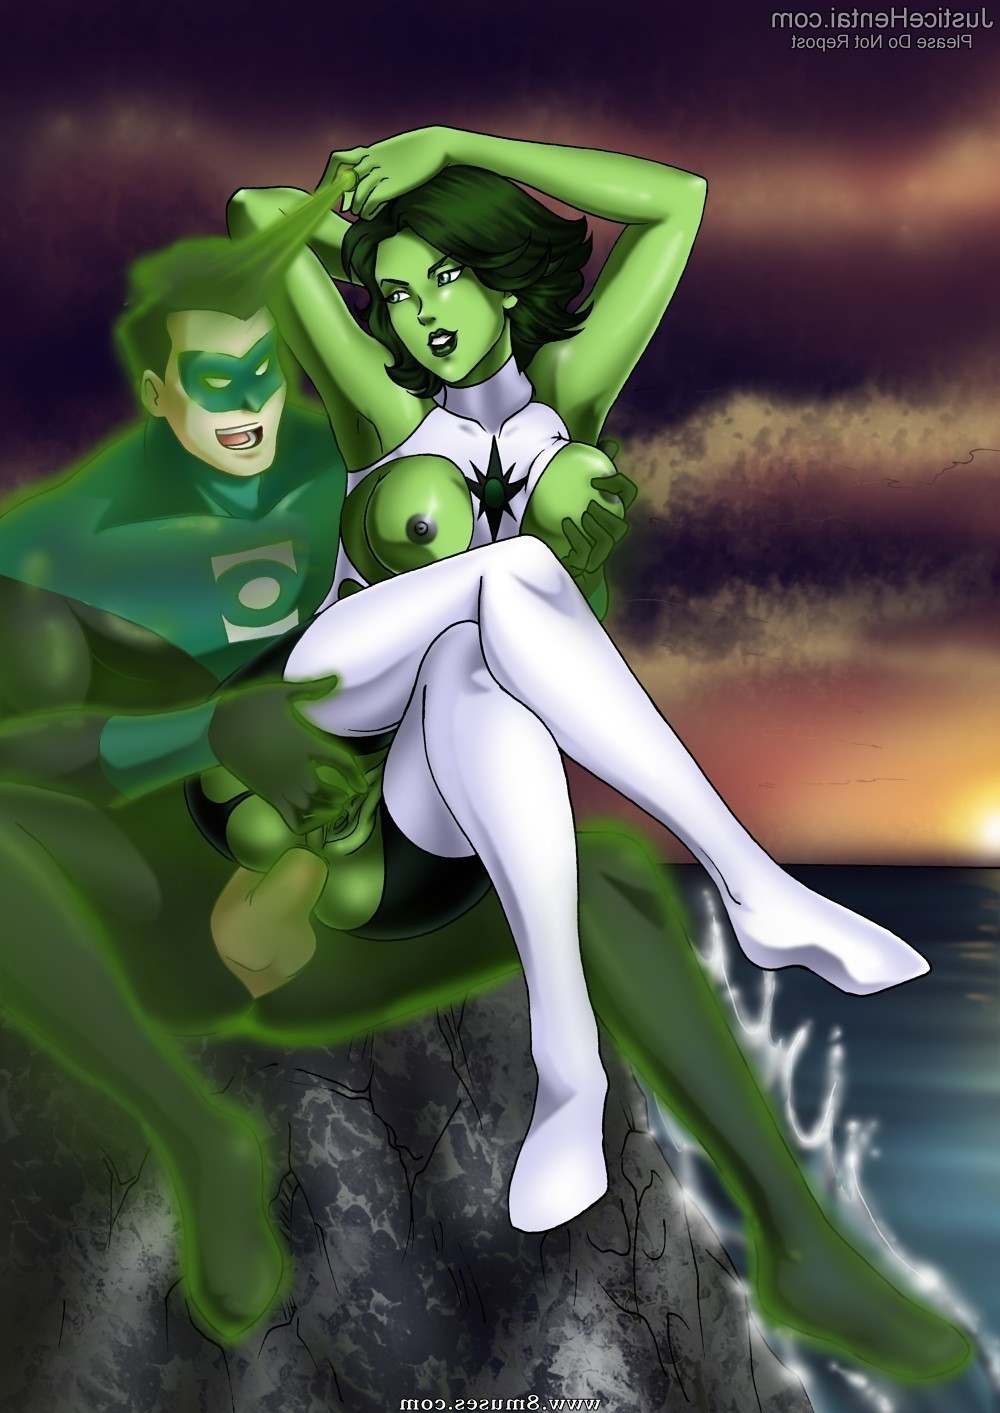 Leia Down Of Mask'd Desire As Green Lantern